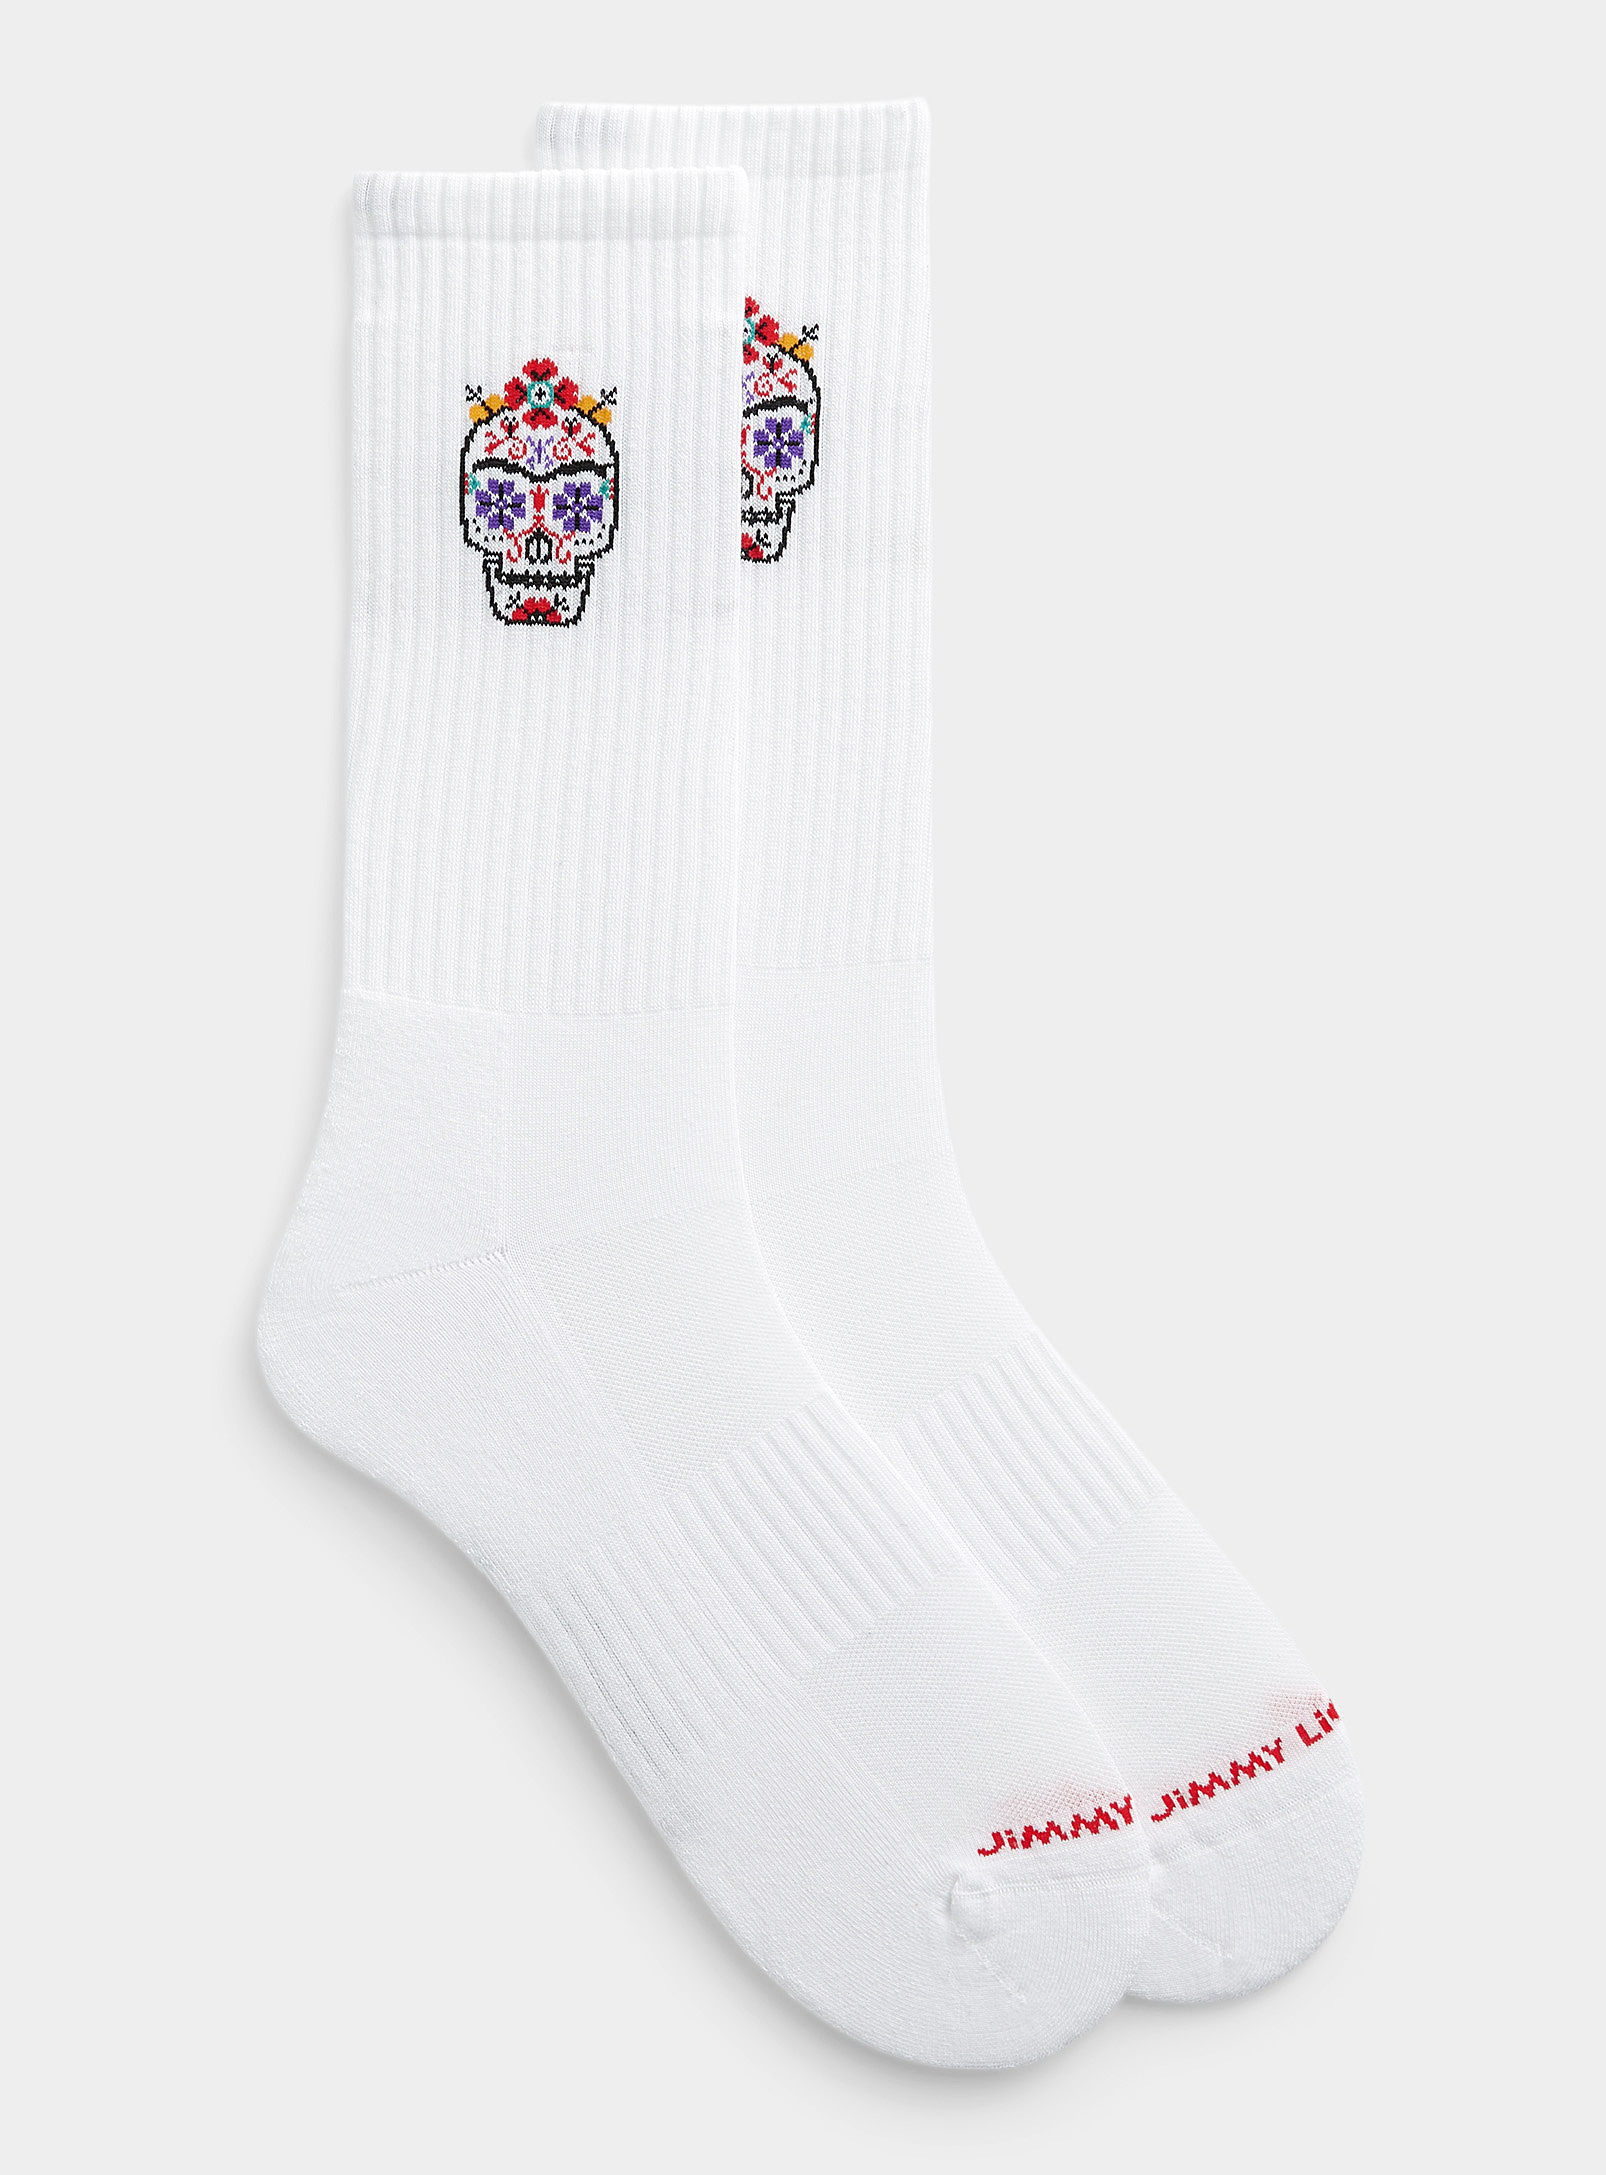 Jimmy Lion - Men's Frida Kahlo Calavera athletic sock